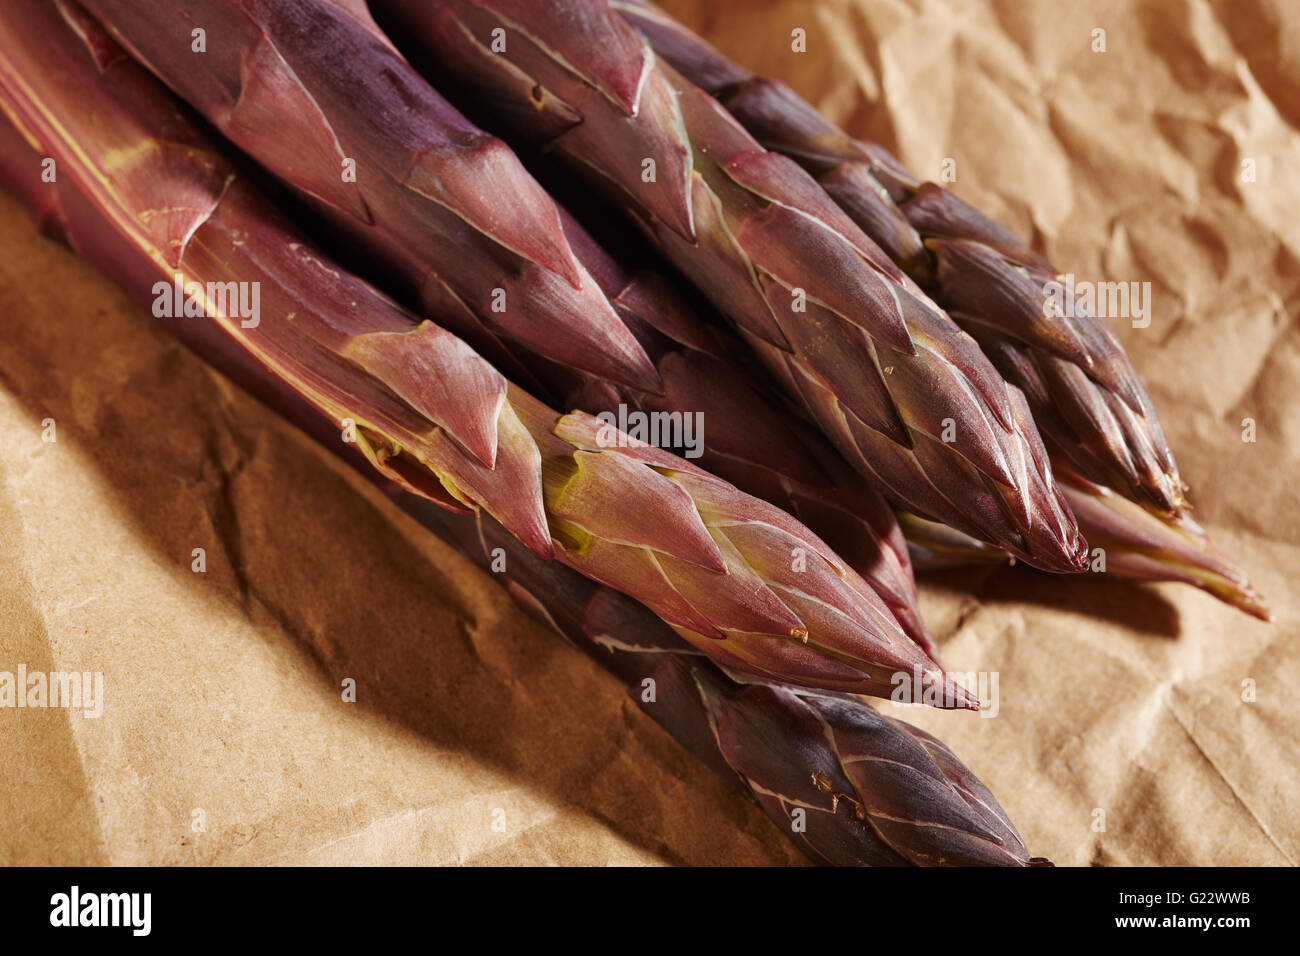 stalks of fresh, purple asparagus from Pennsylvania, USA Stock Photo